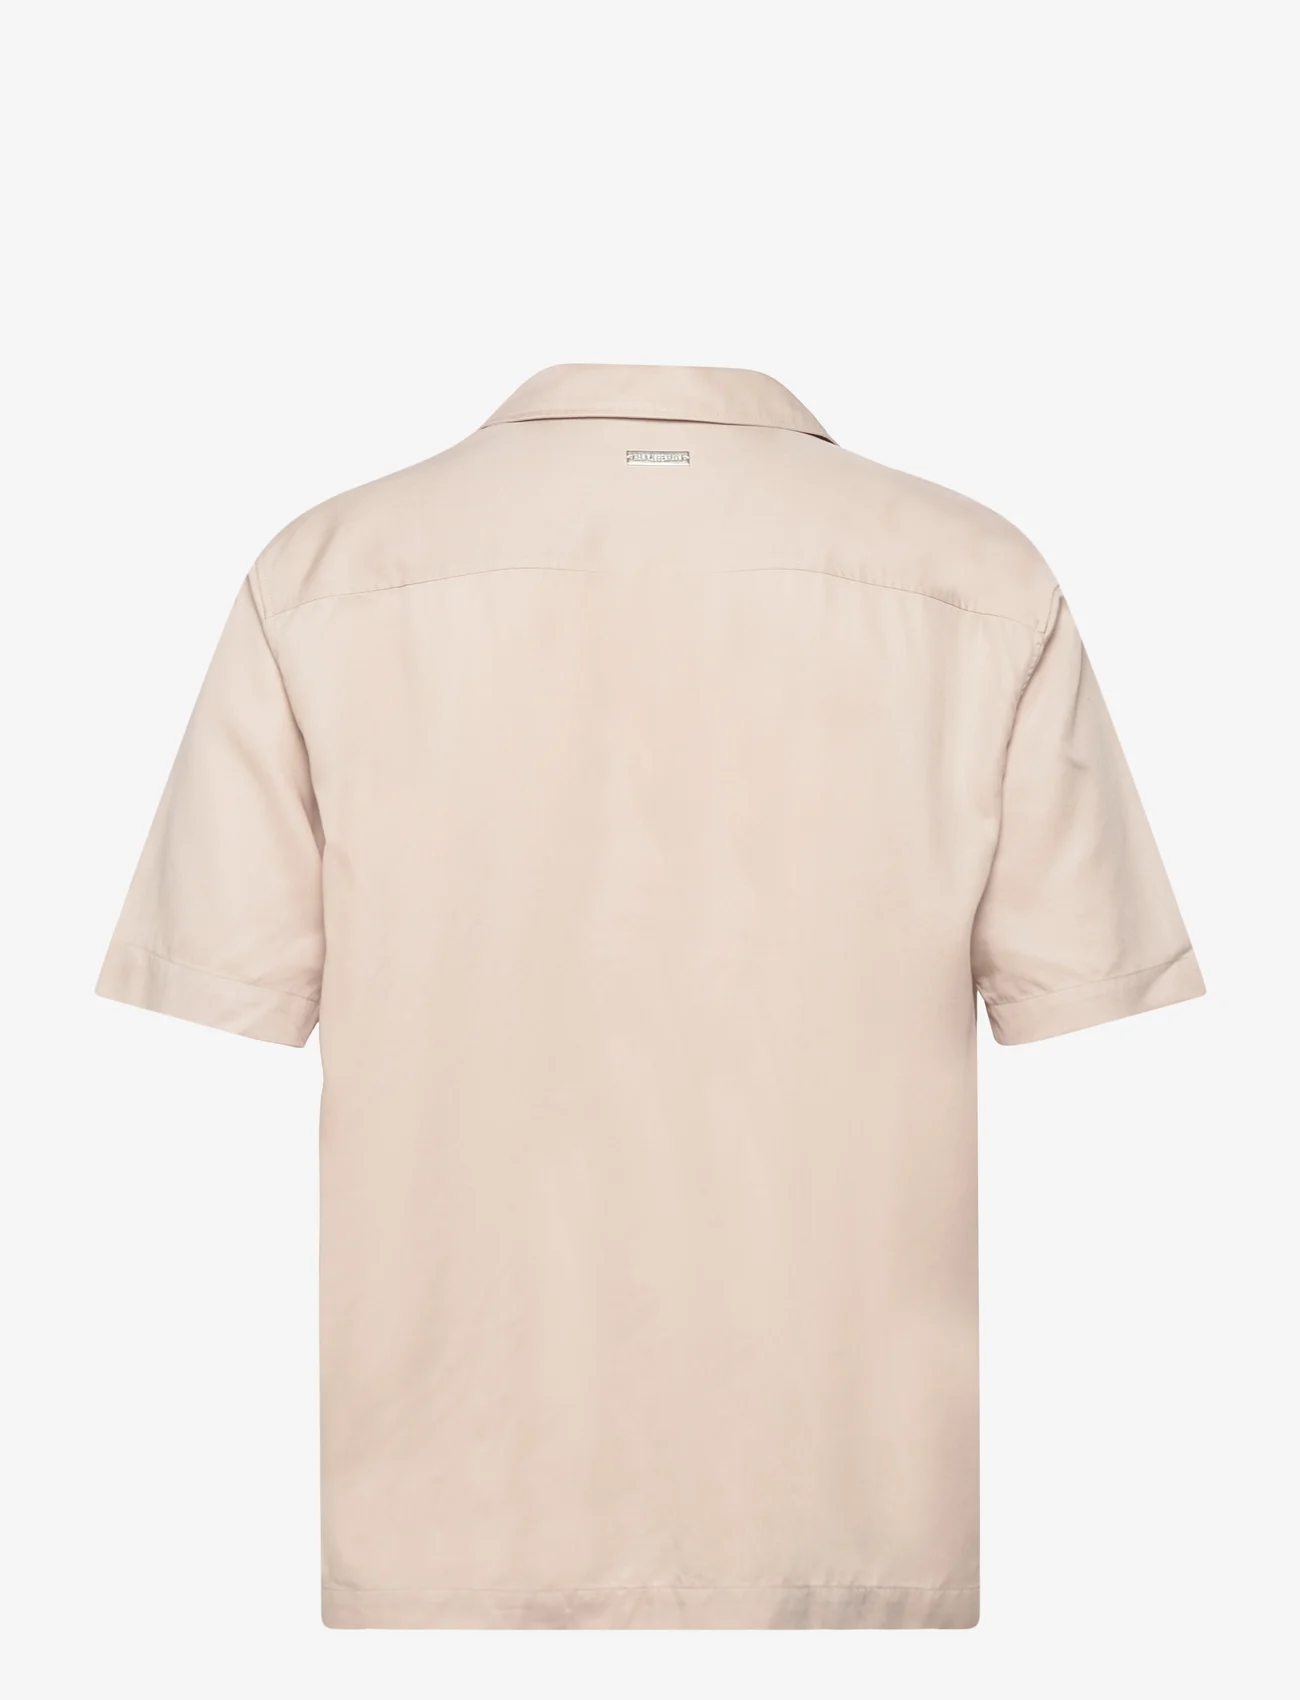 HAN Kjøbenhavn - Tencel Summer Shirt - kurzärmelig - sand - 1